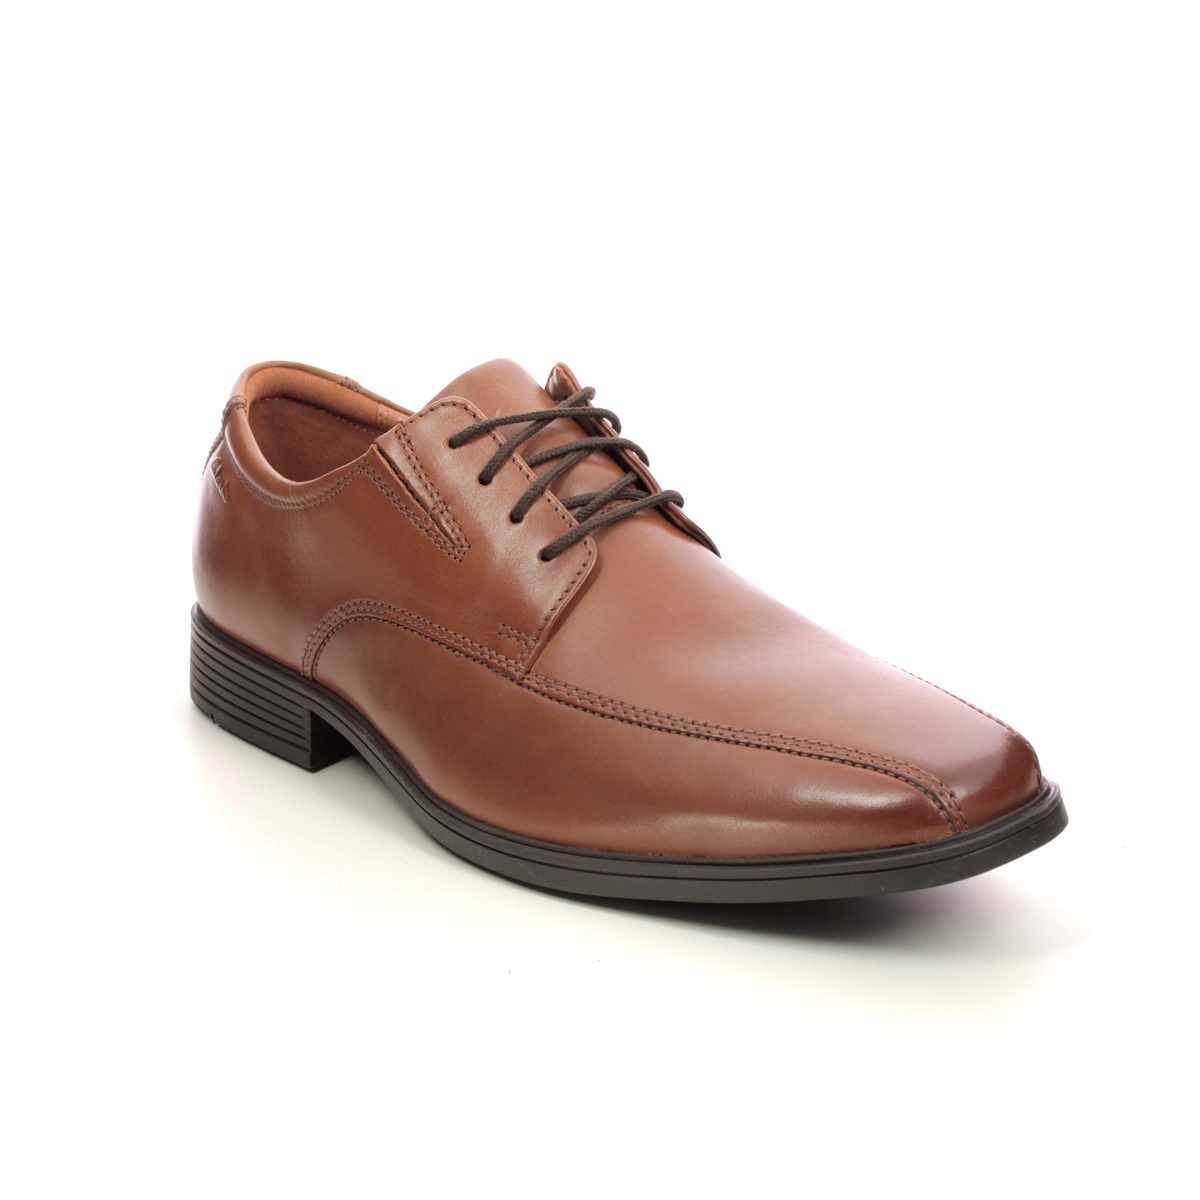 Clarks Tilden Walk Dark Tan Mens Formal Shoes 300958H In Size 10.5 In Plain Dark Tan H Width Fitting Extra Wide